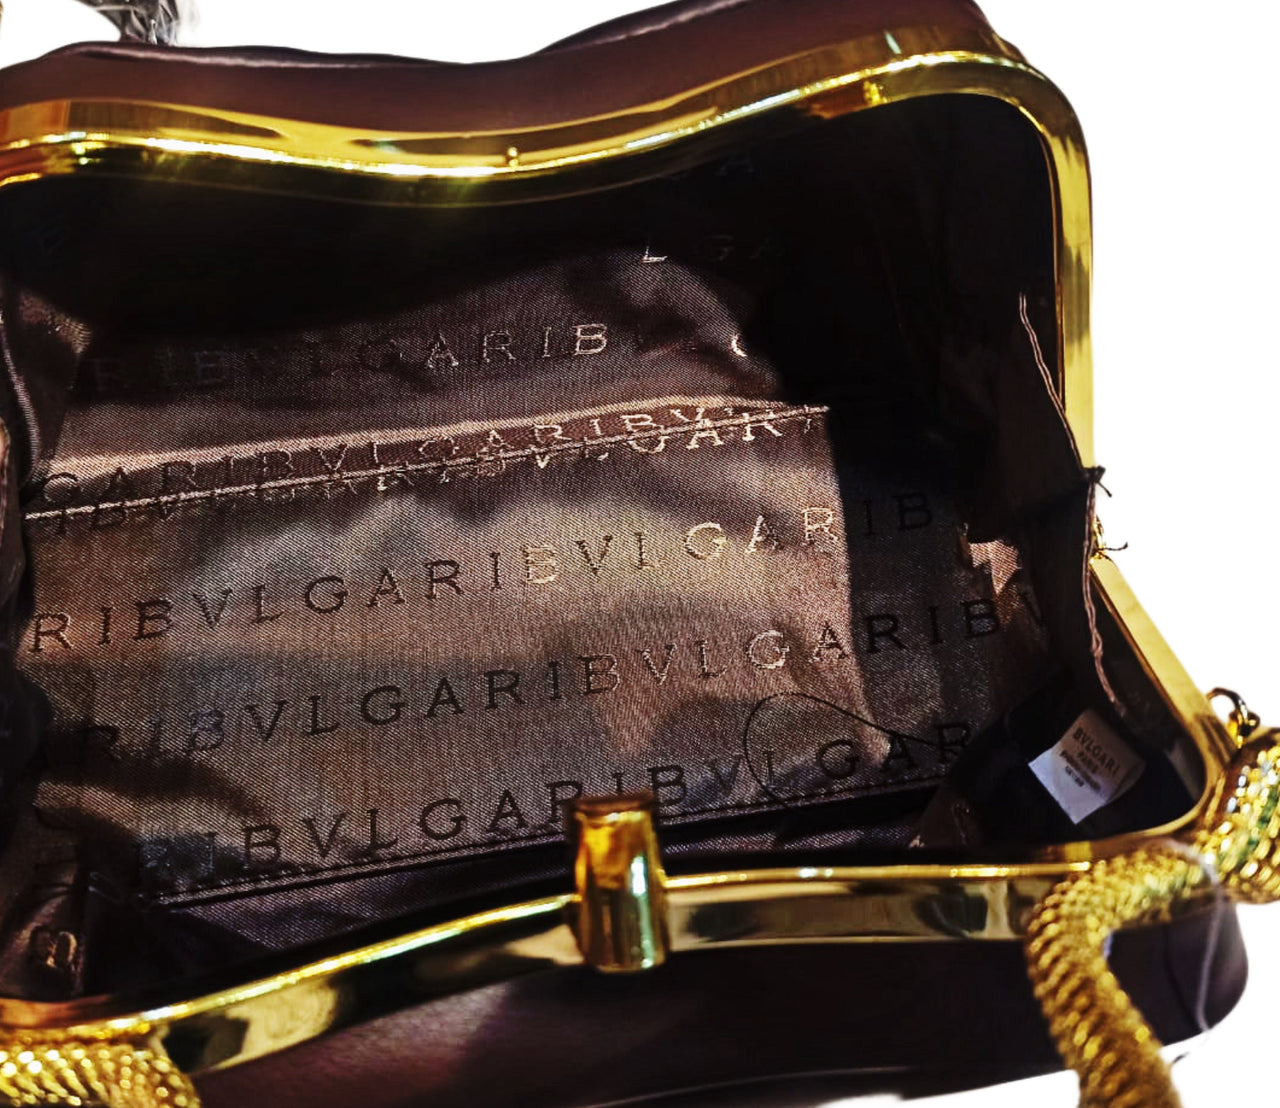 The Bag Couture Handbags, Wallets & Cases BVLGARI Serpentine Top Handle Handag Black